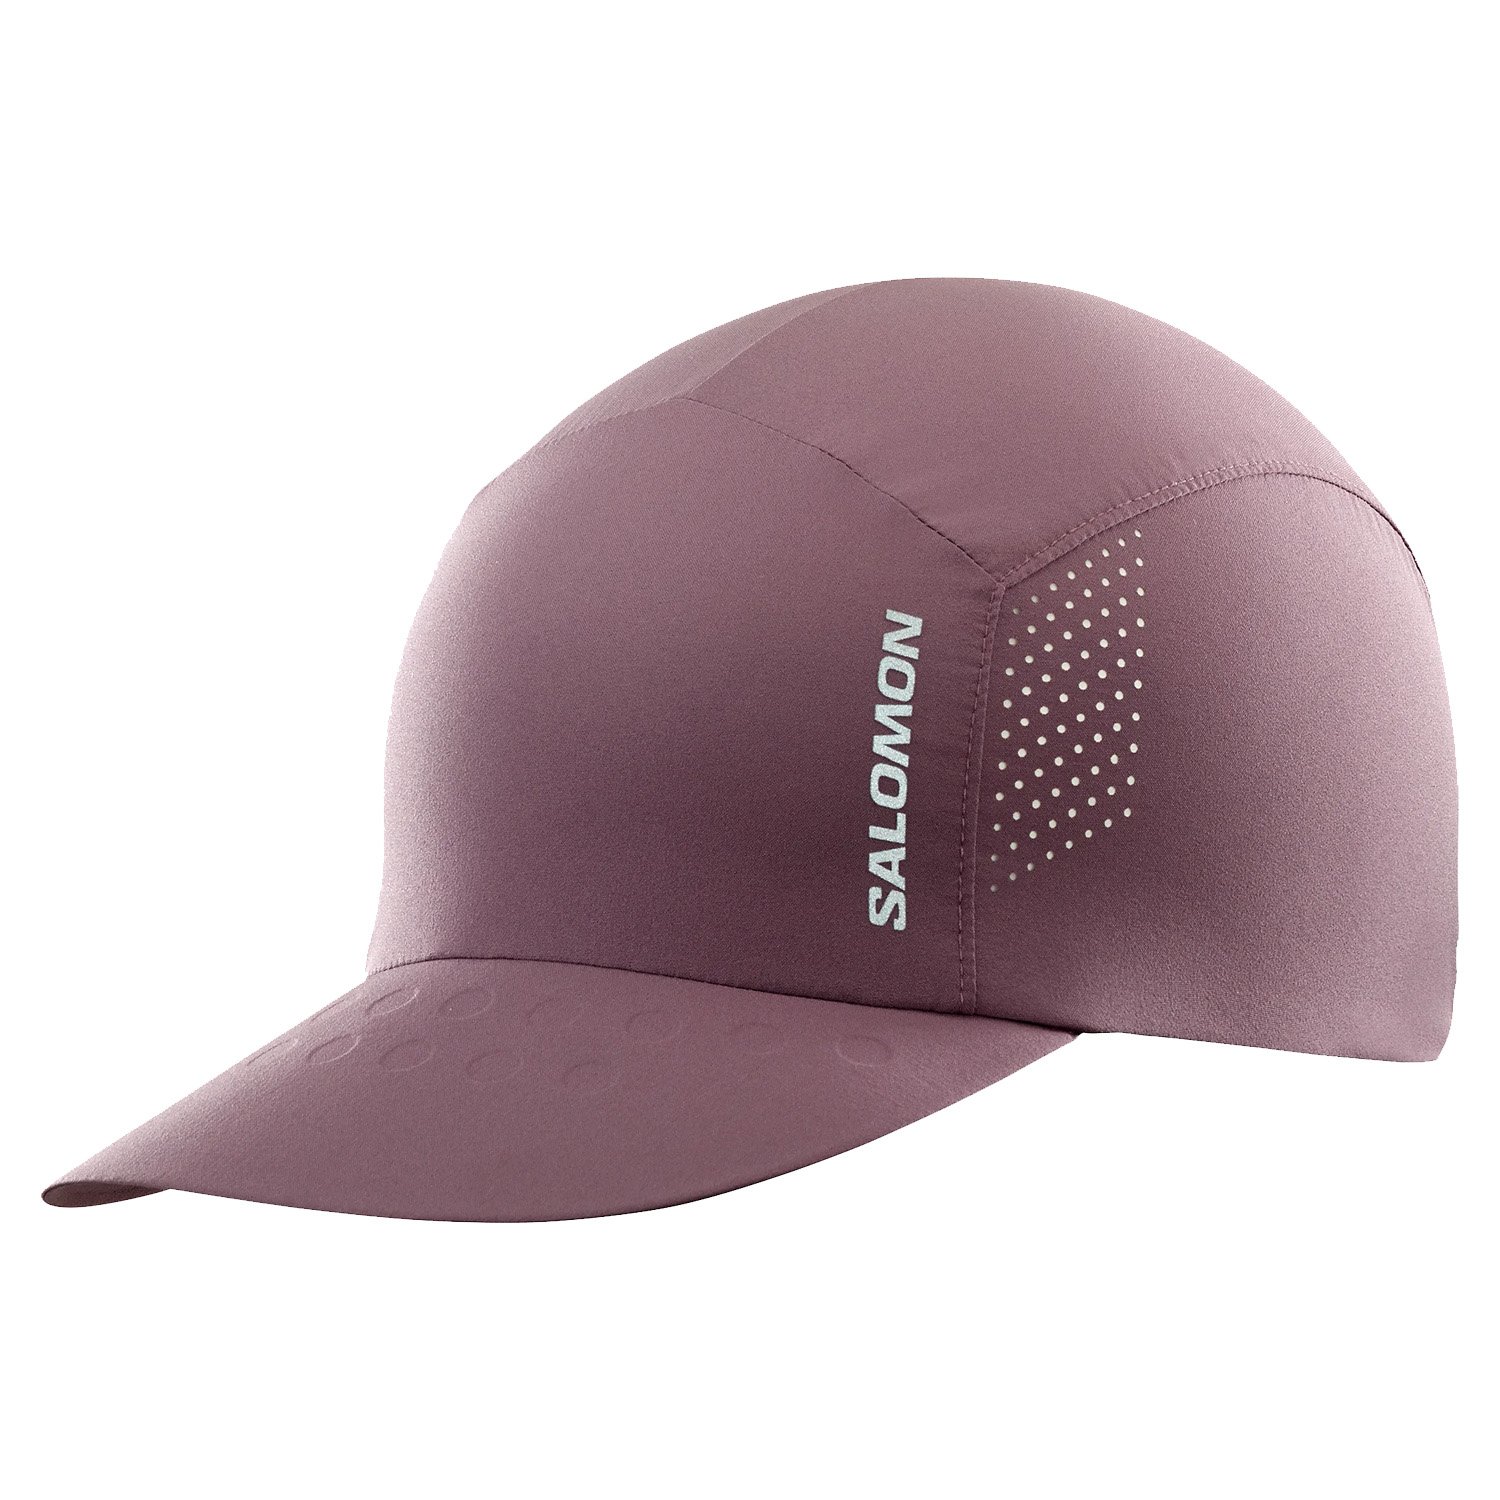 Salomon Cross Compact Şapka - Mor - 1